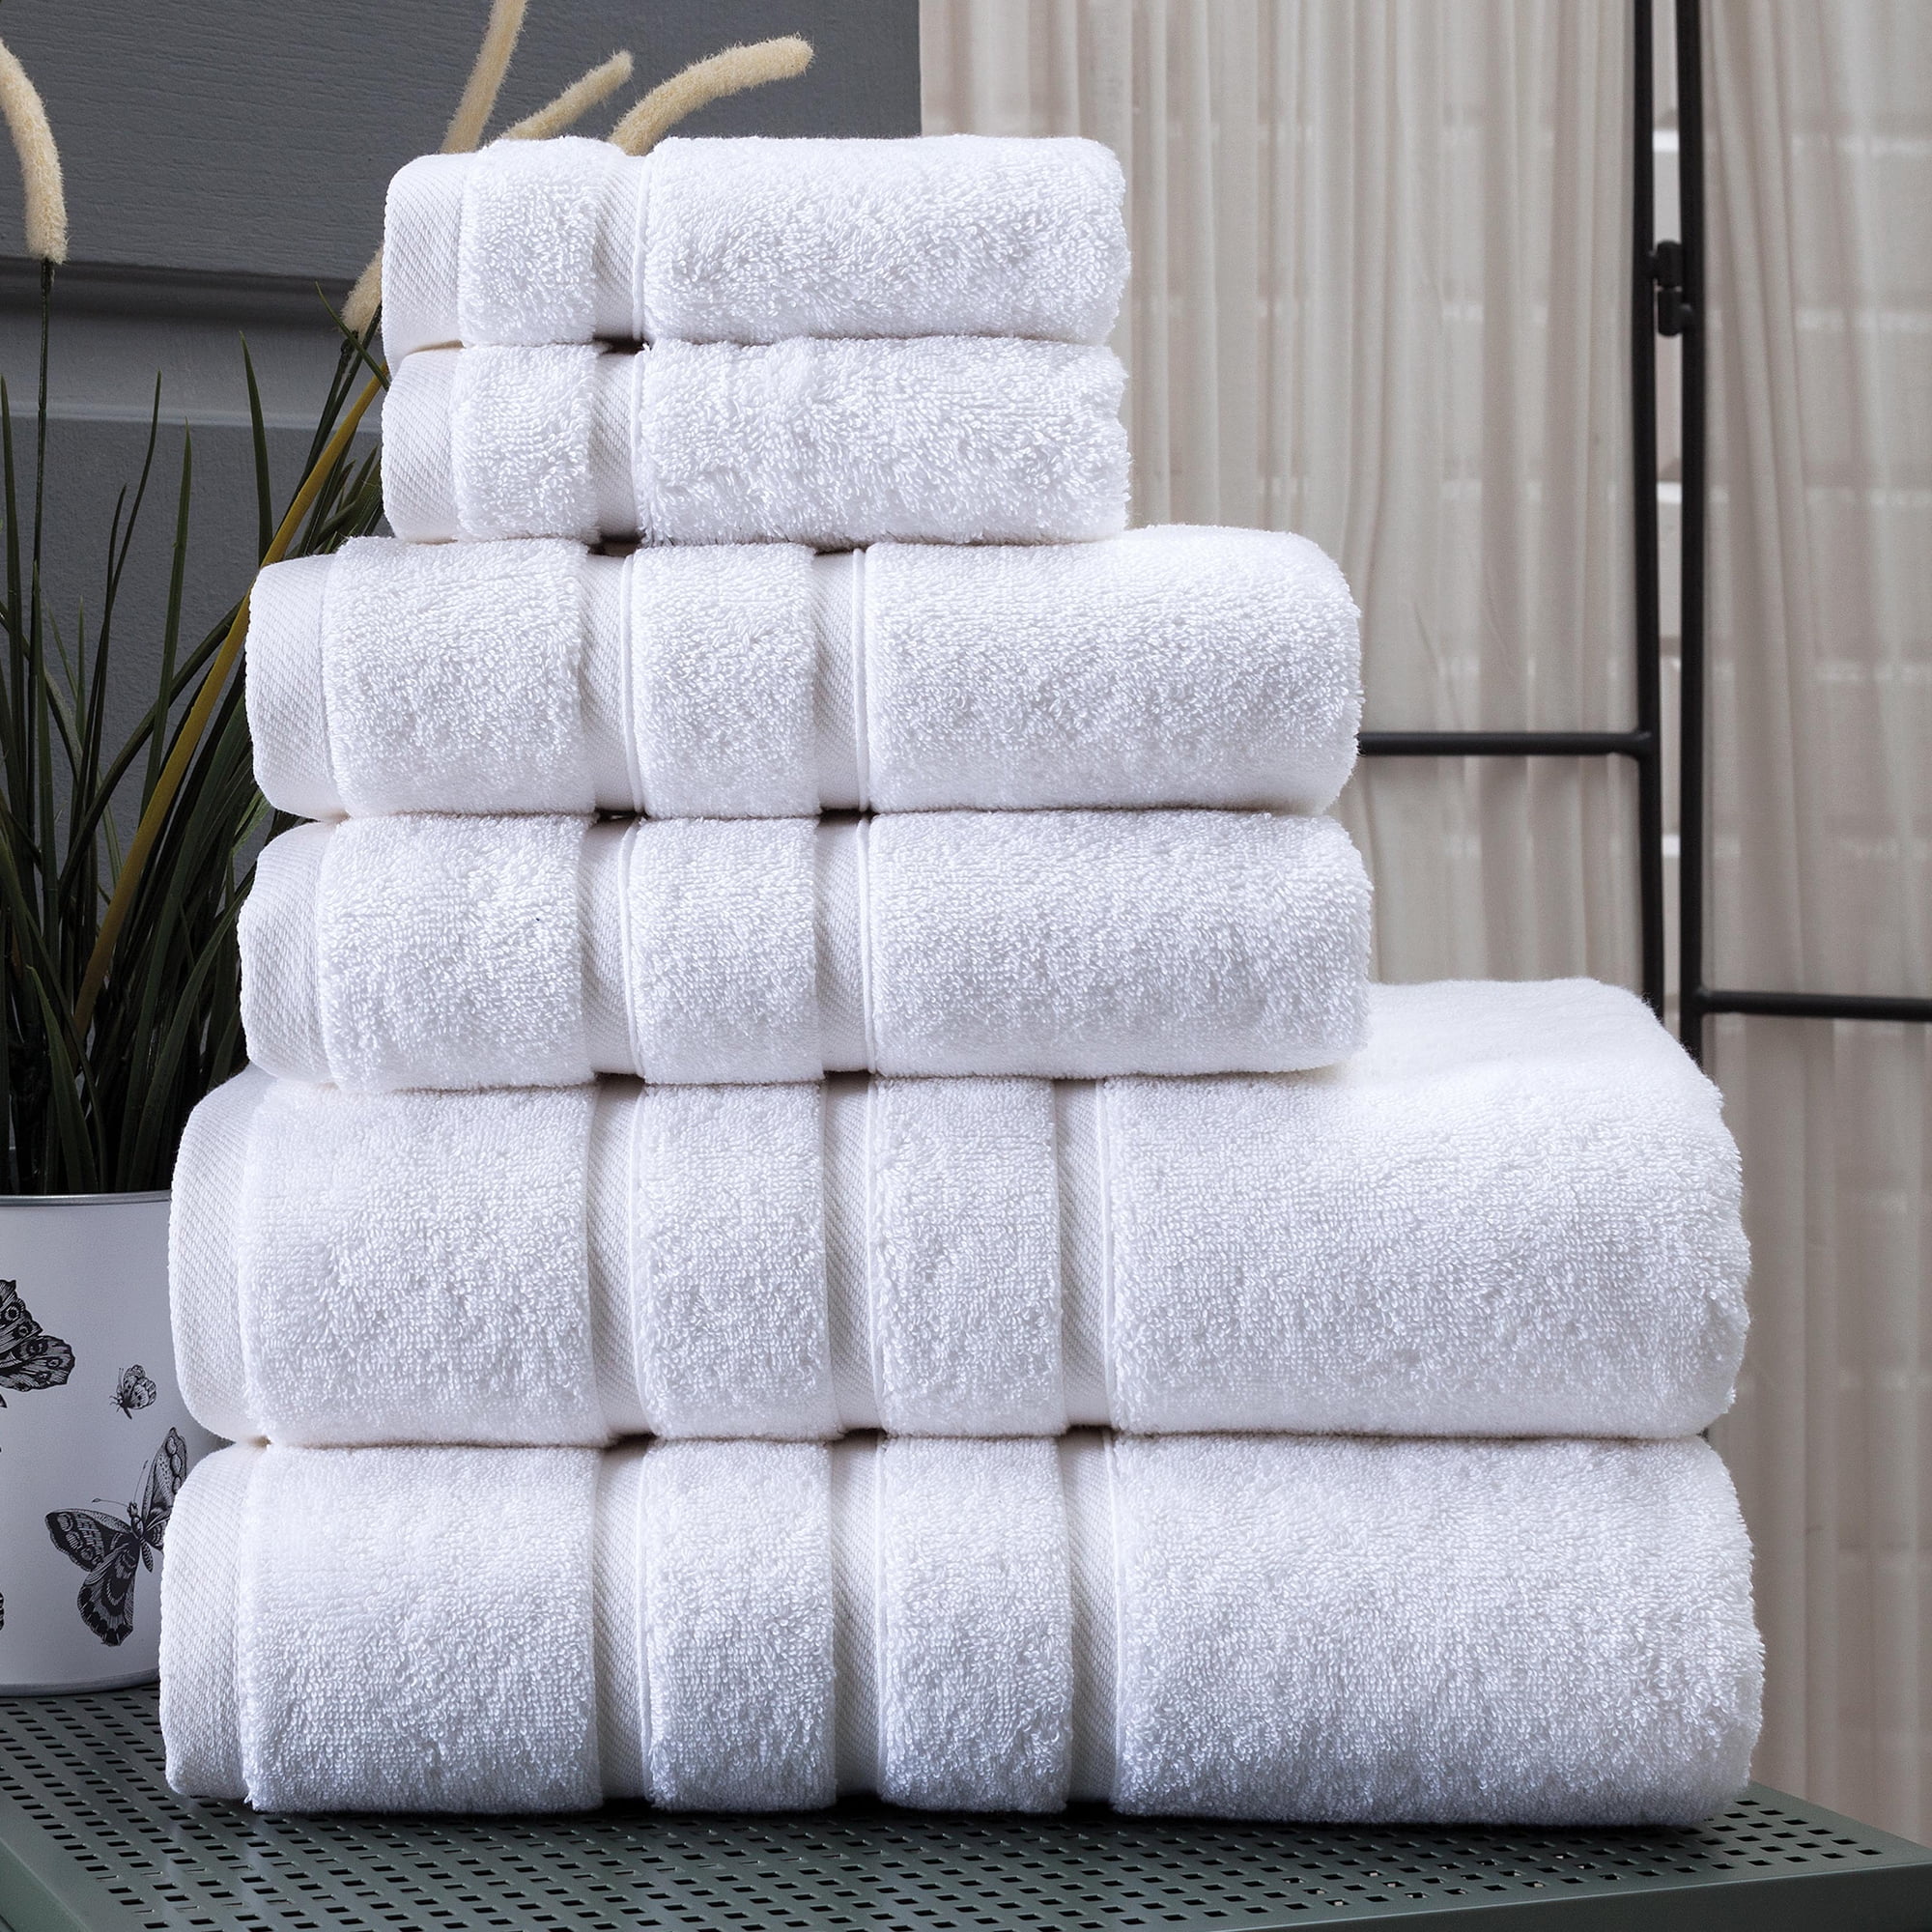 UpThrone Luxury Turkish Cotton White Bath Towels Set of 6